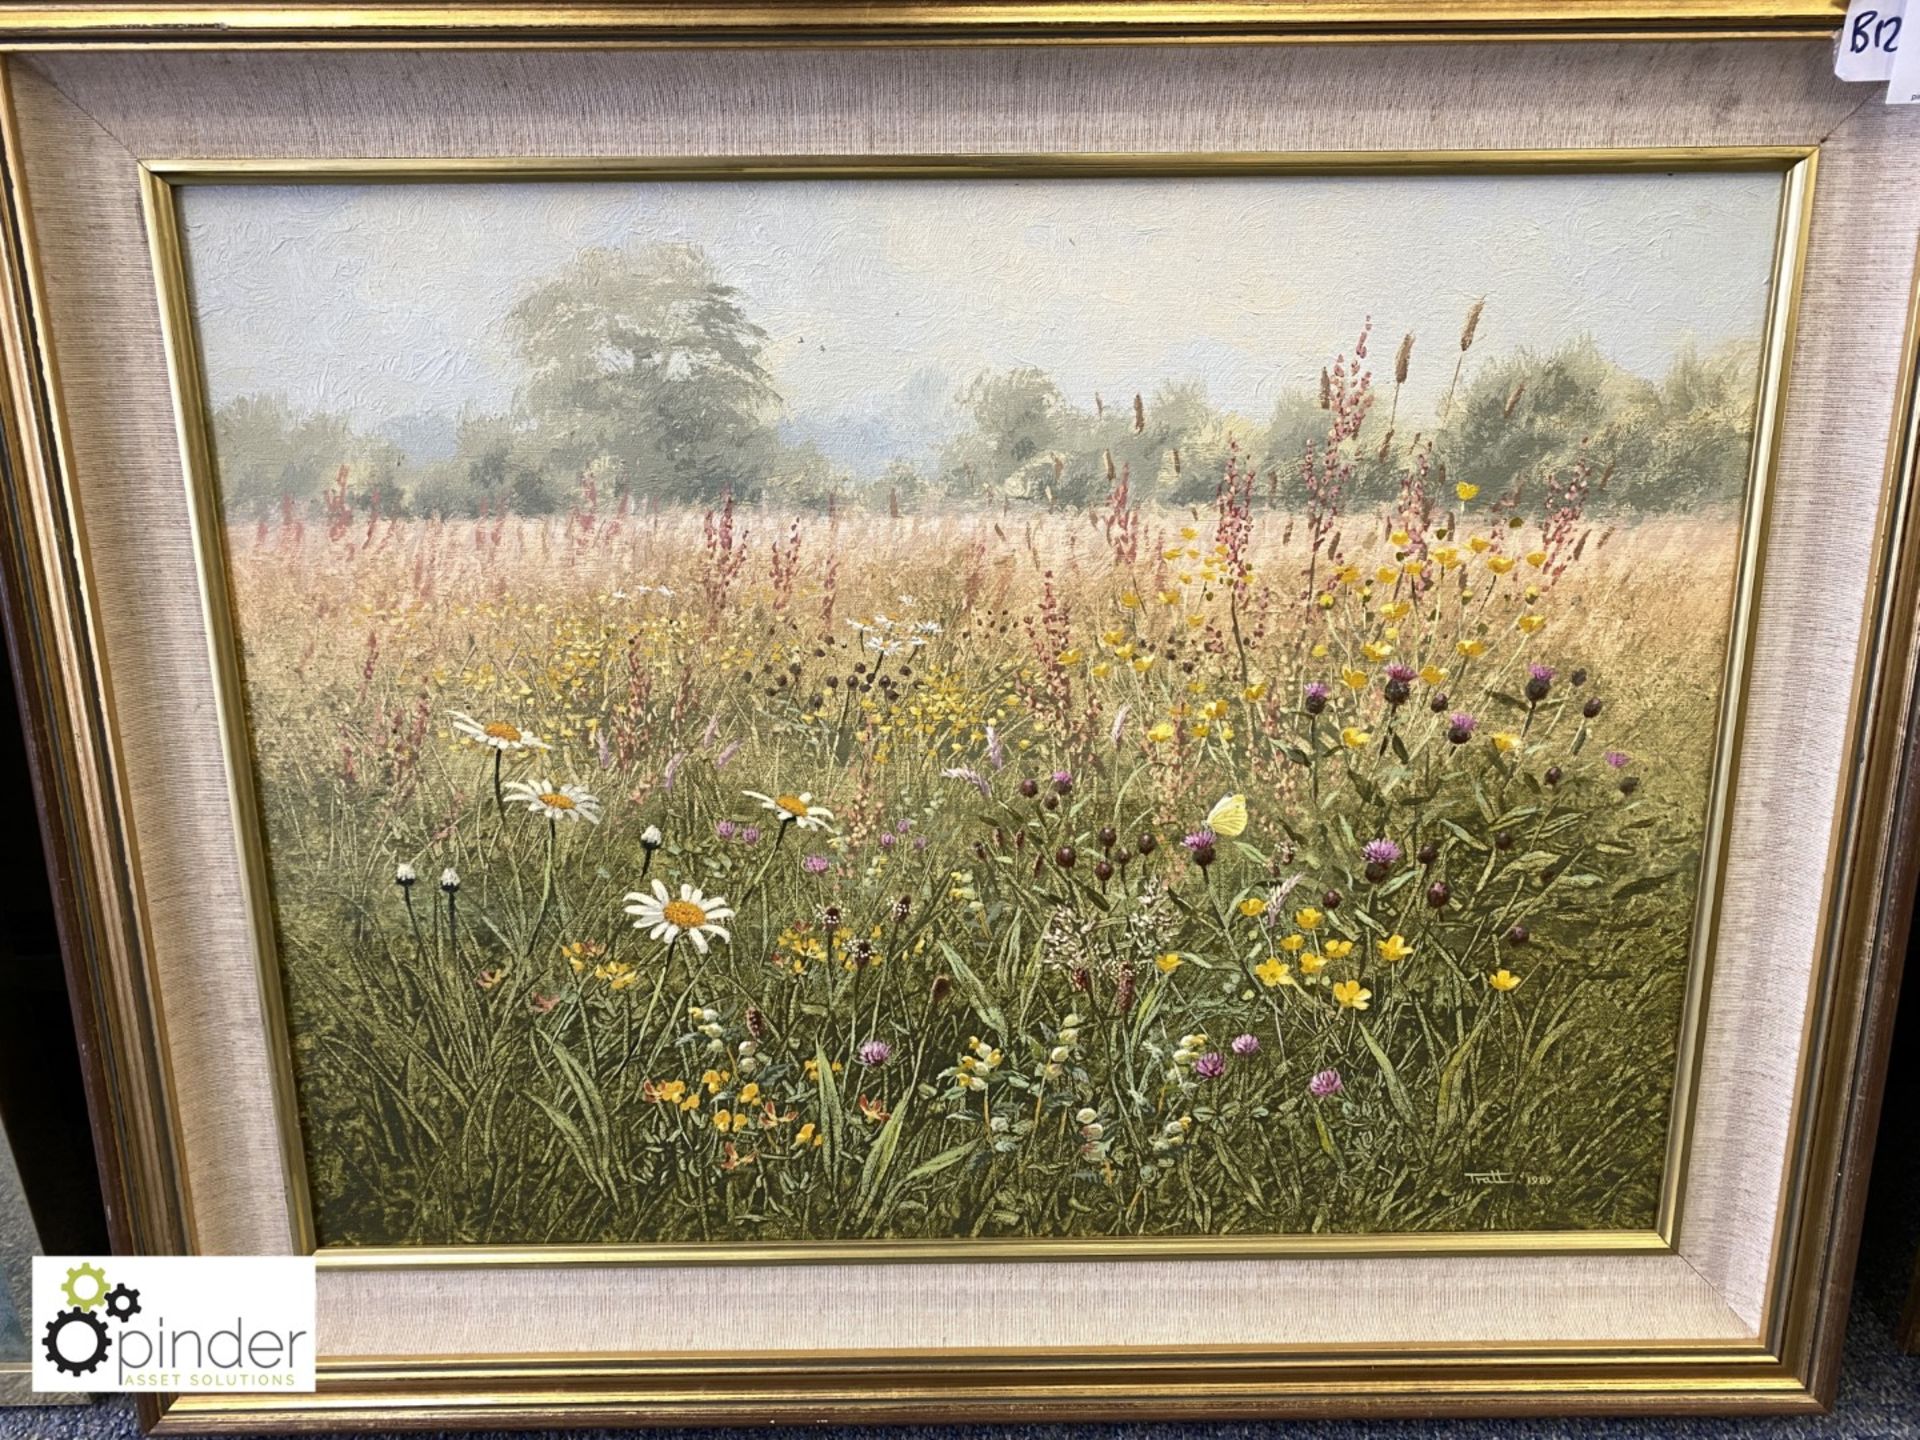 Framed Oil on Canvas “Field of Flowers” by Richard Tratt, 1989, 750mm x 600mm